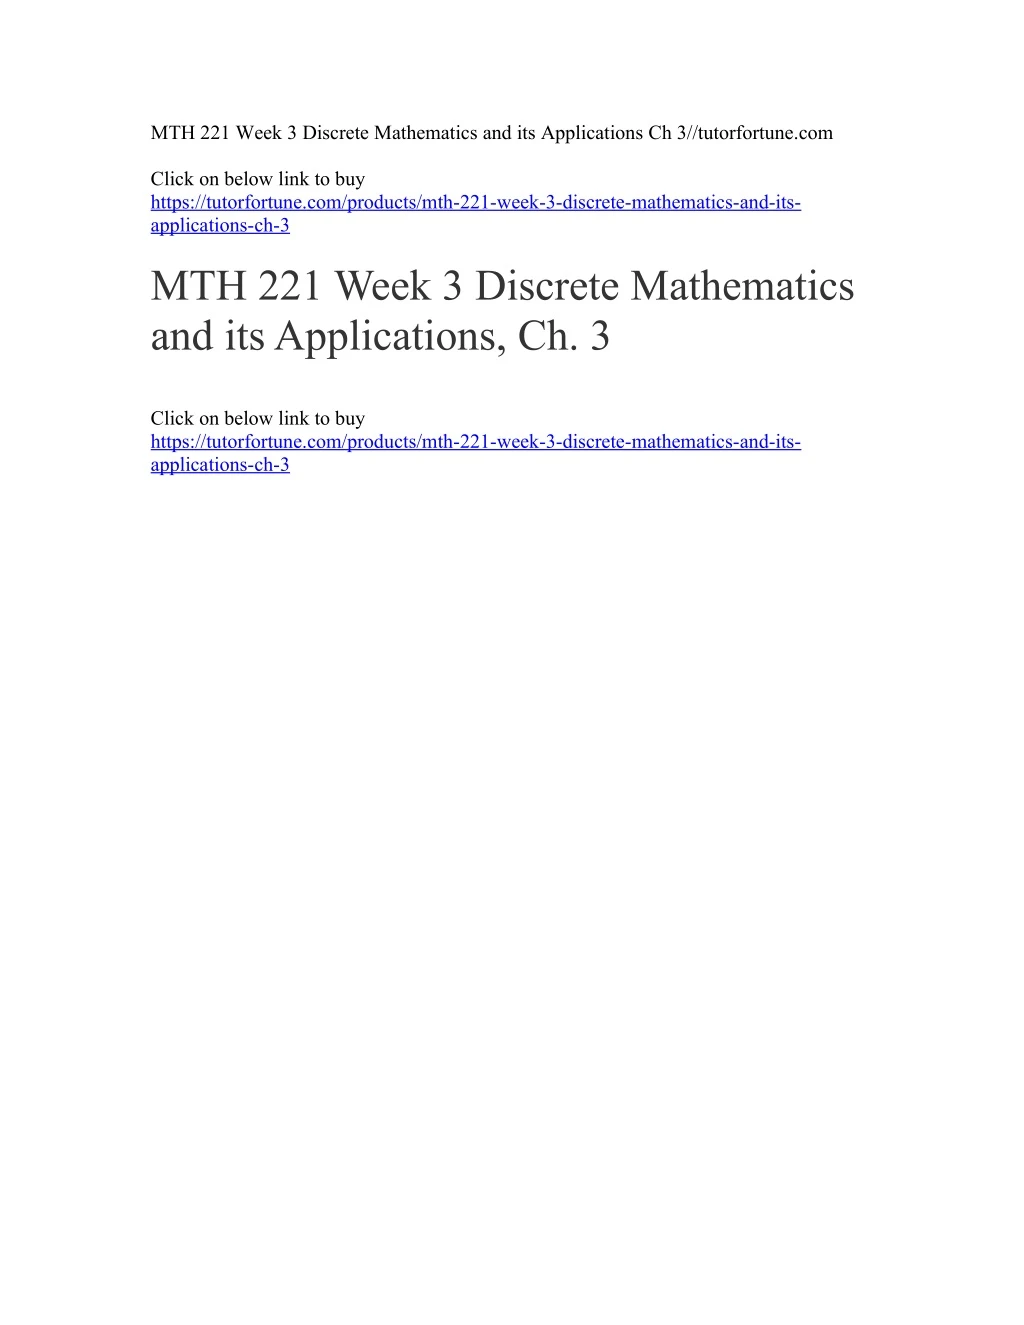 mth 221 week 3 discrete mathematics